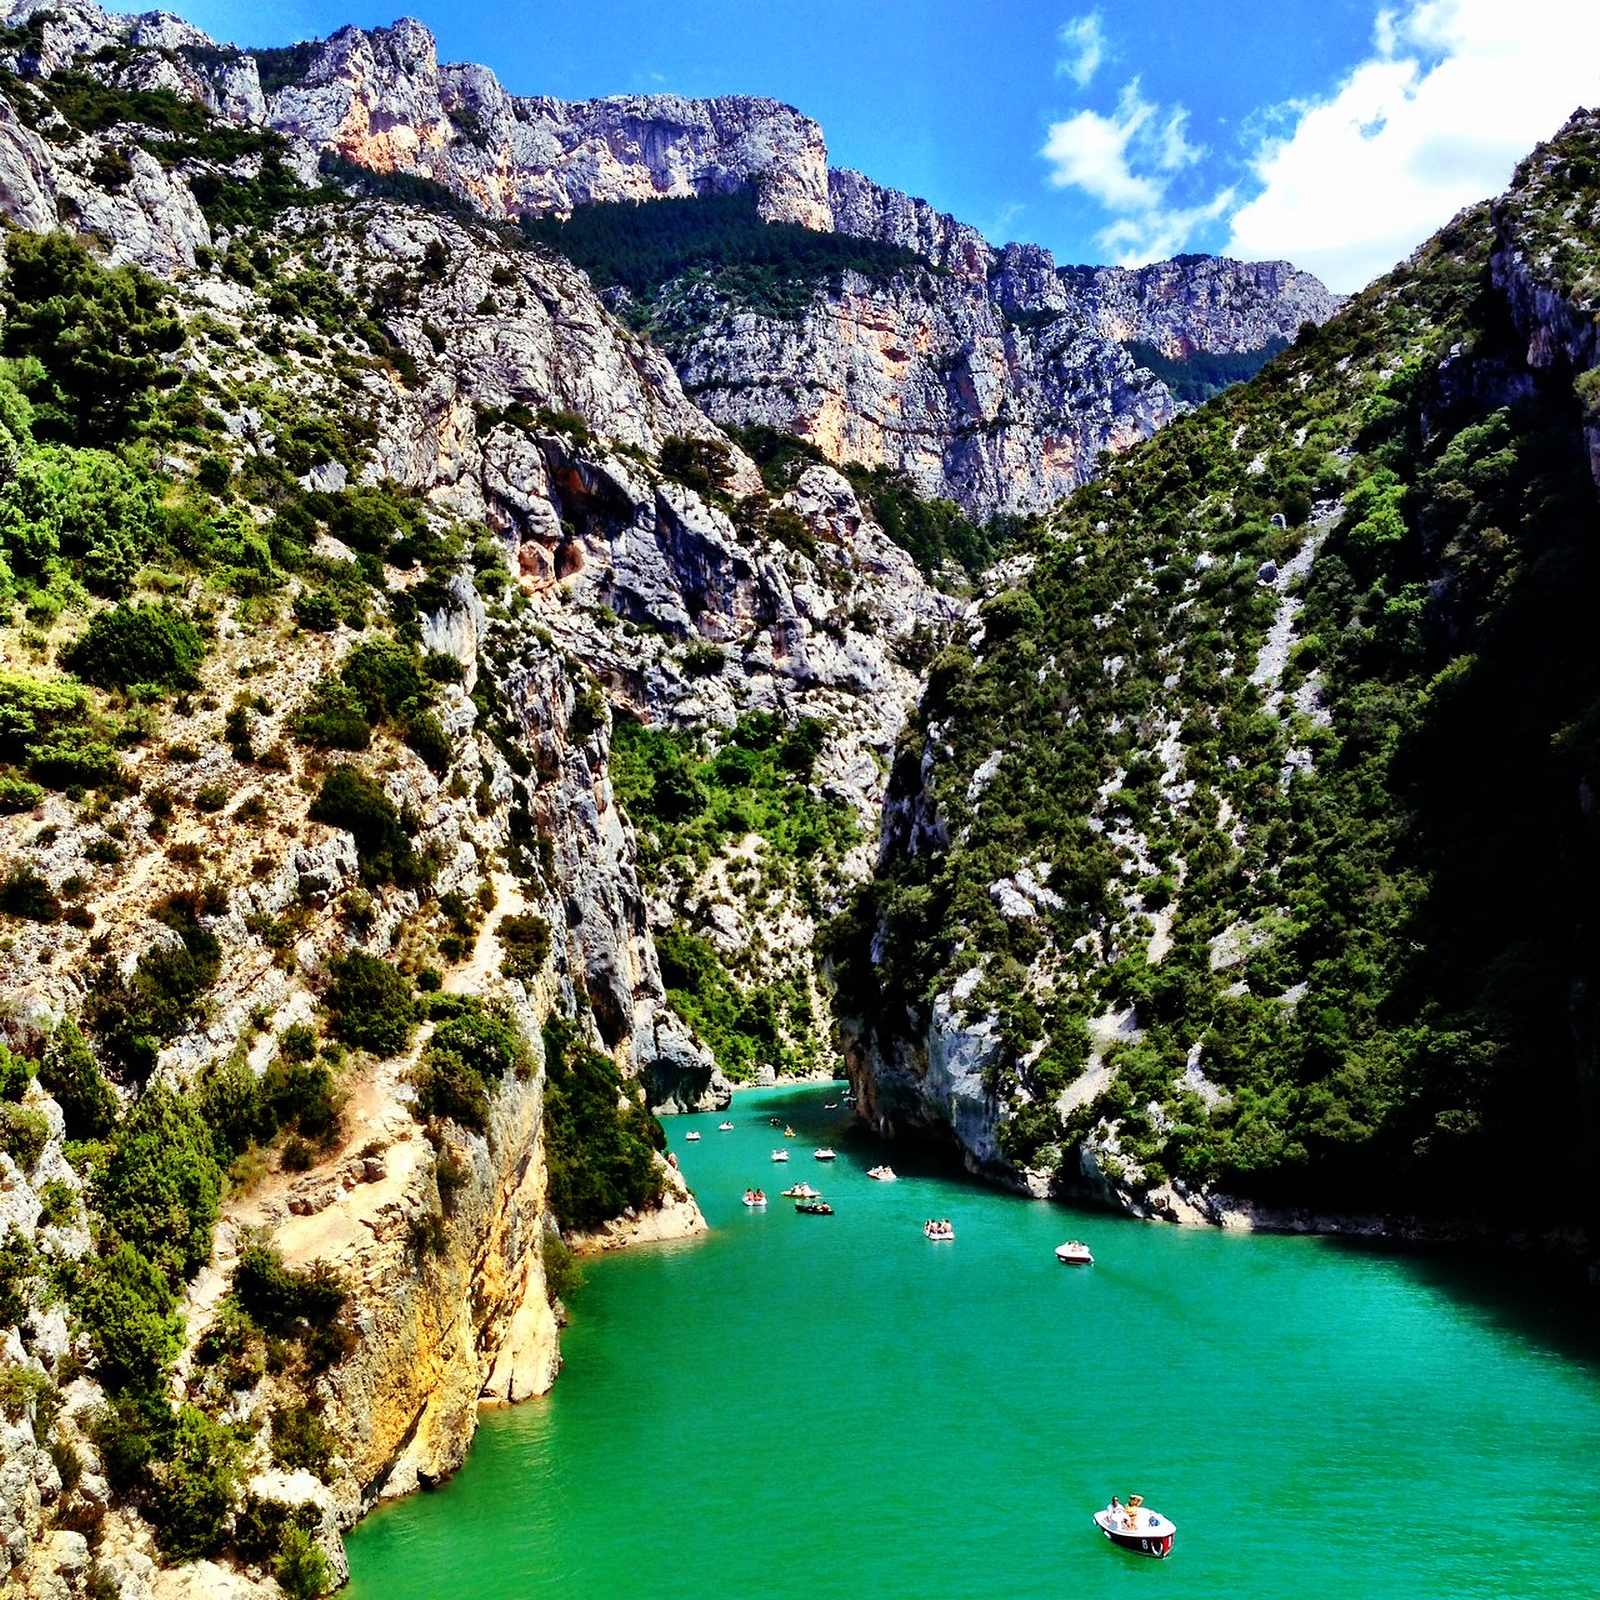 Stunning turquoise waters of the Gorges Du Verdon - France's best kept secret. 